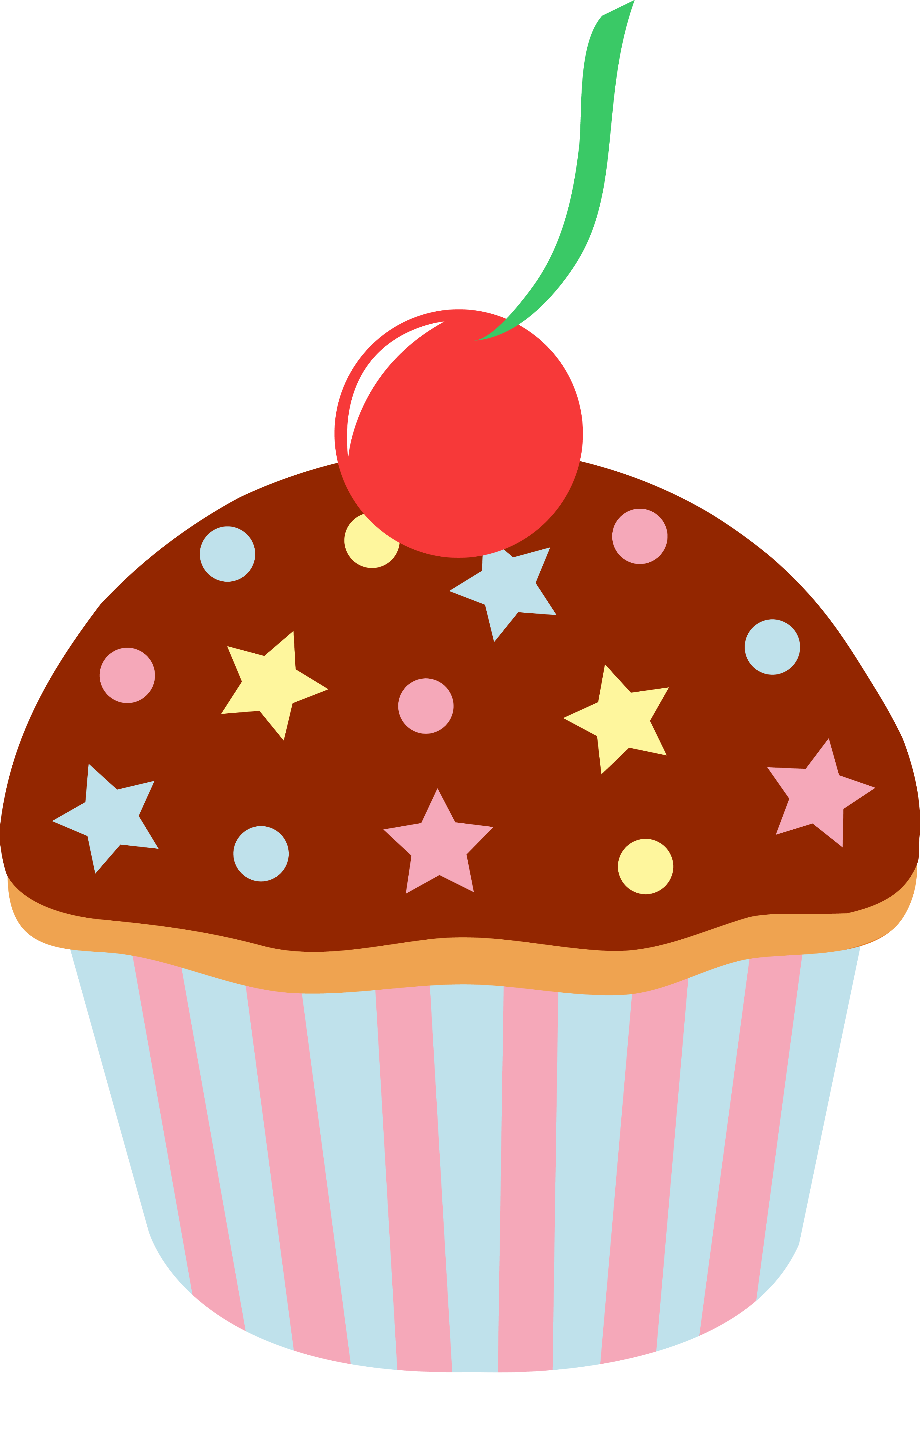 cupcake logo animated